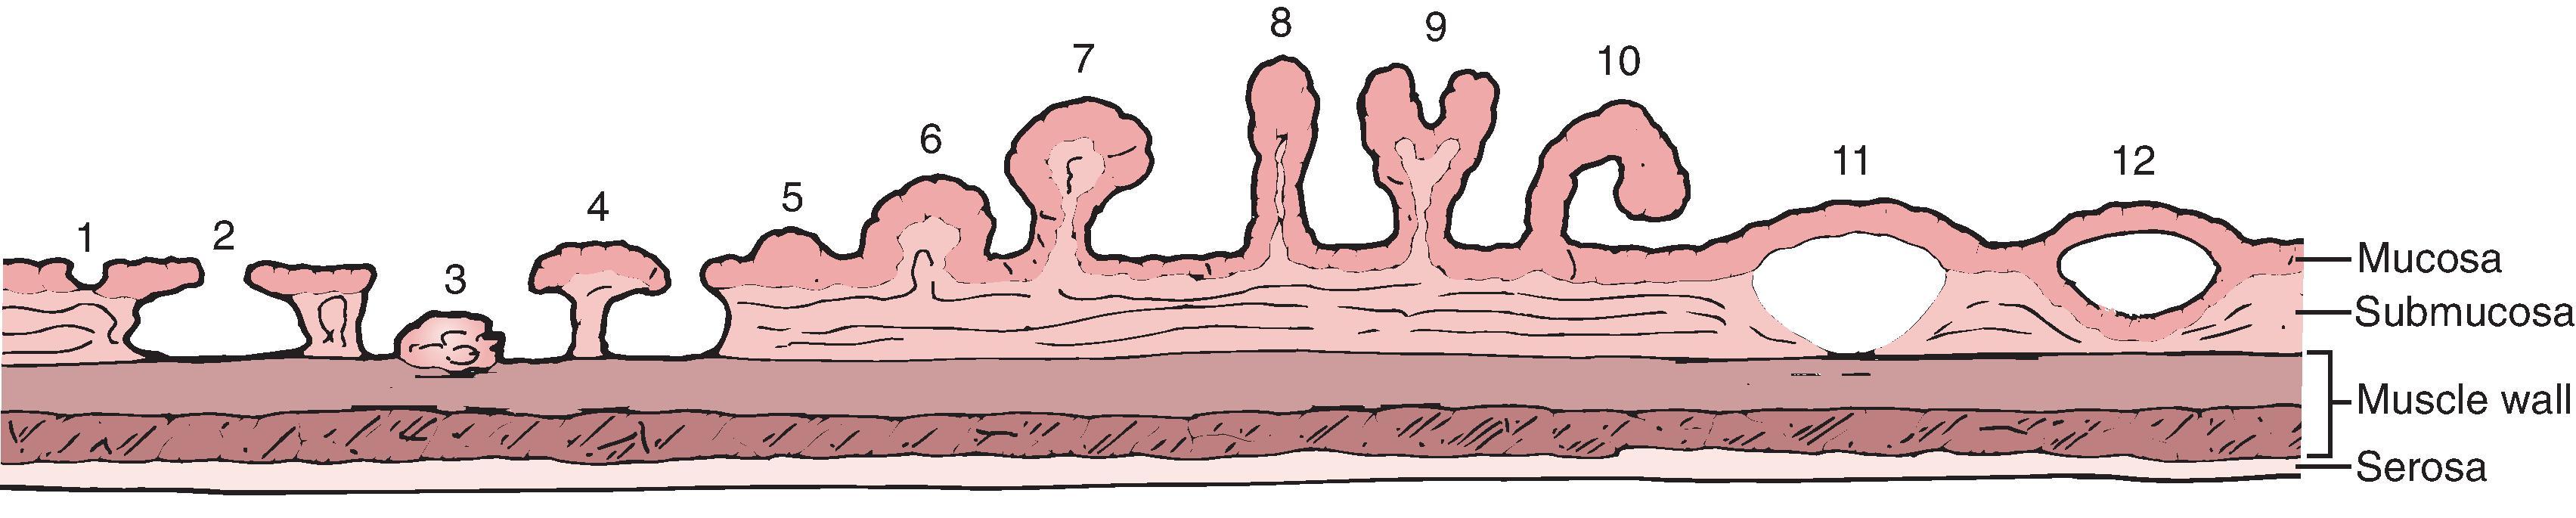 Fig. 41.1, Spectrum of mucosal abnormalities in ulcerative colitis.